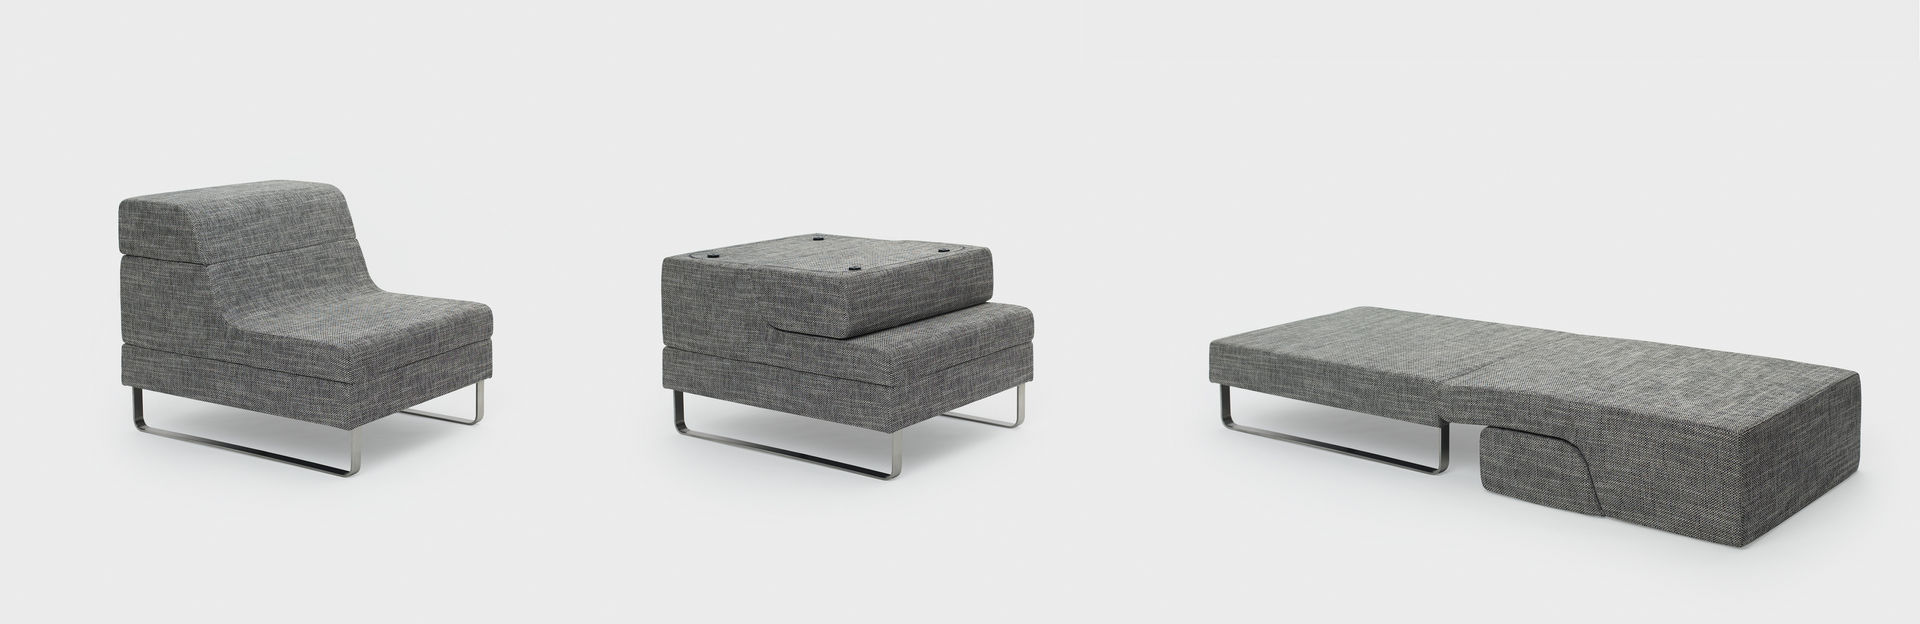 Bettsessel Canyon, Home3 Design GmbH Home3 Design GmbH Modern living Sofas & armchairs